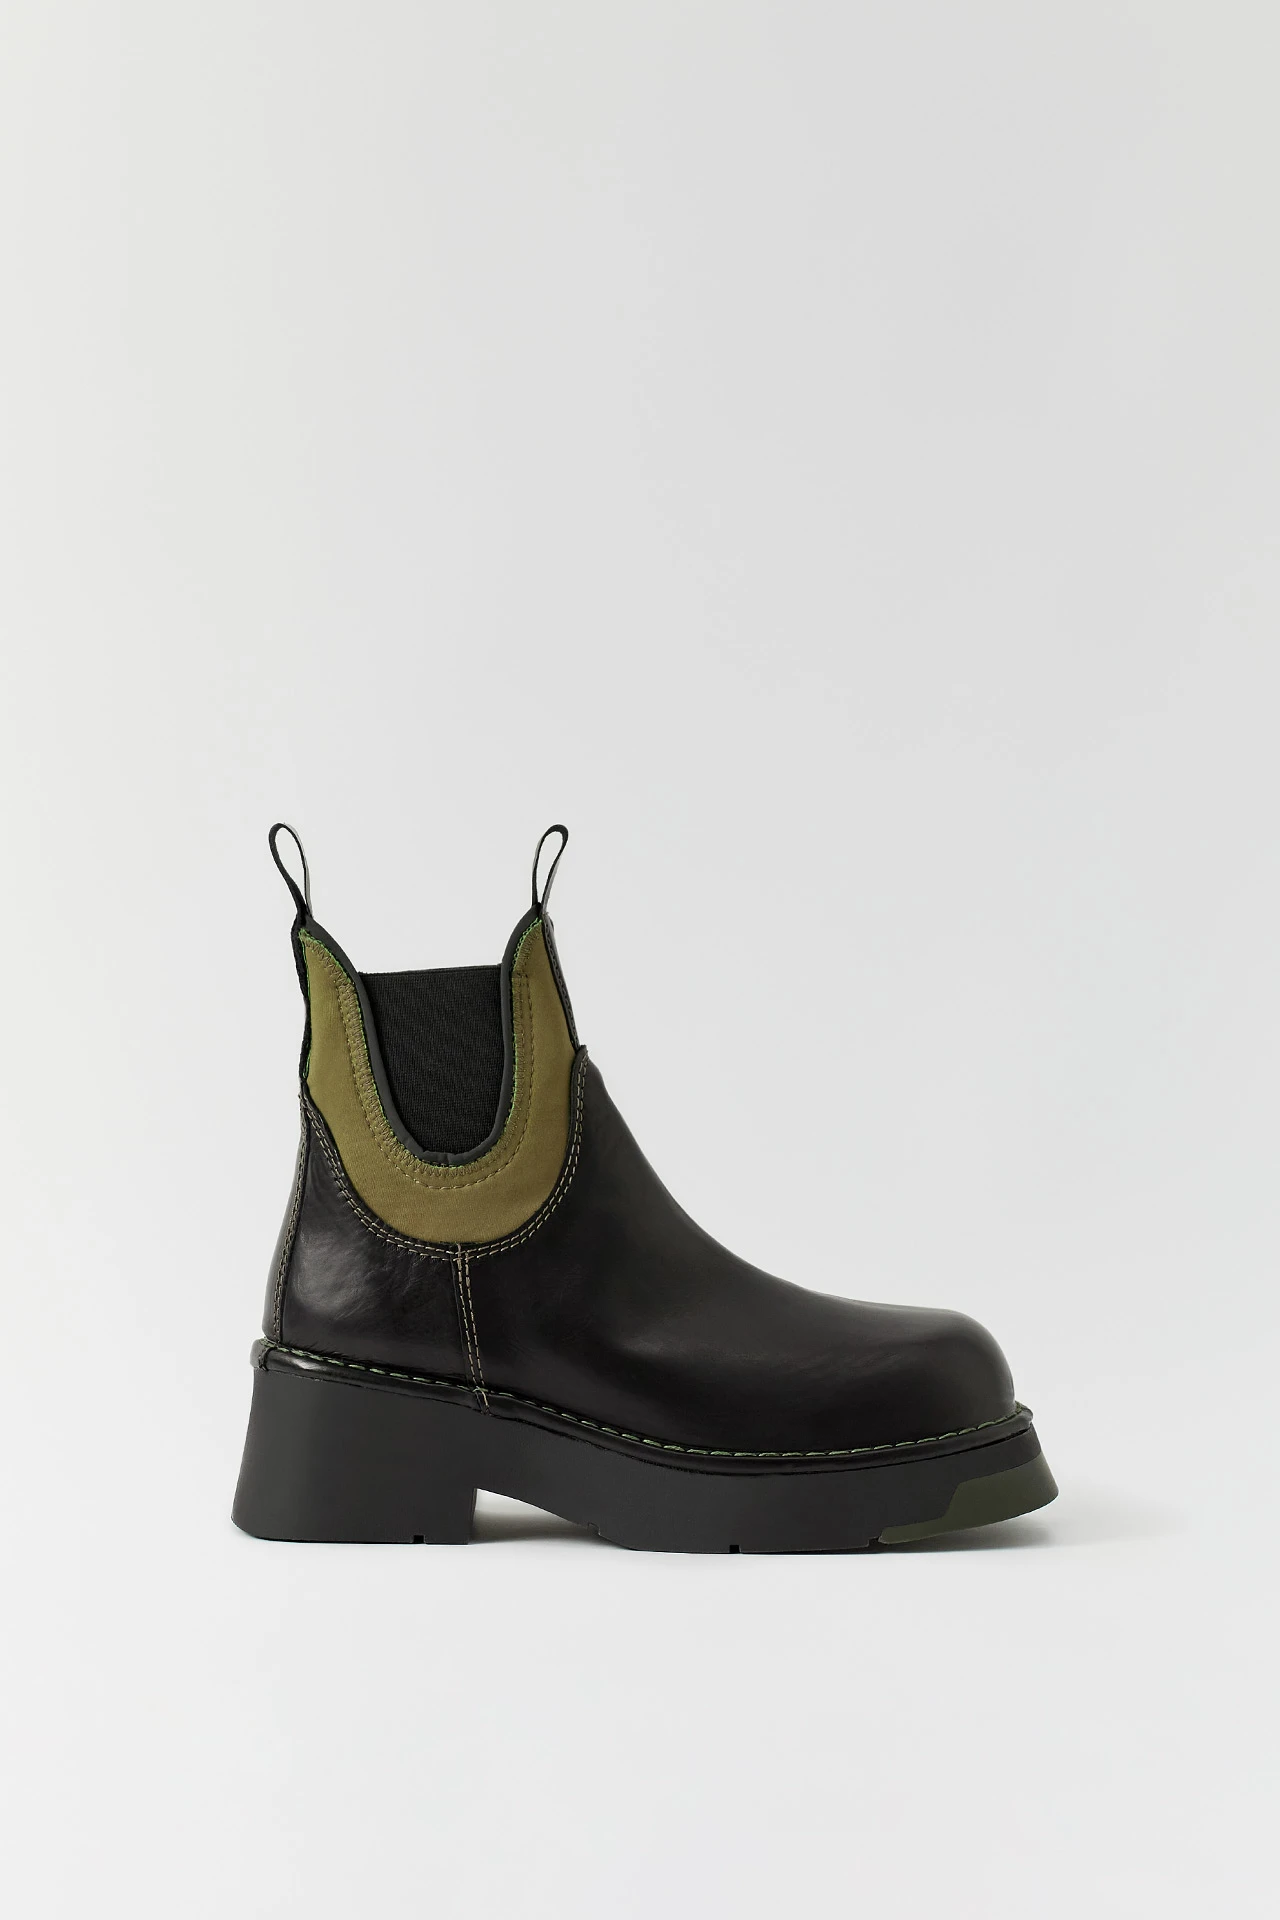 miista-kaya-black-ankle-boots-01